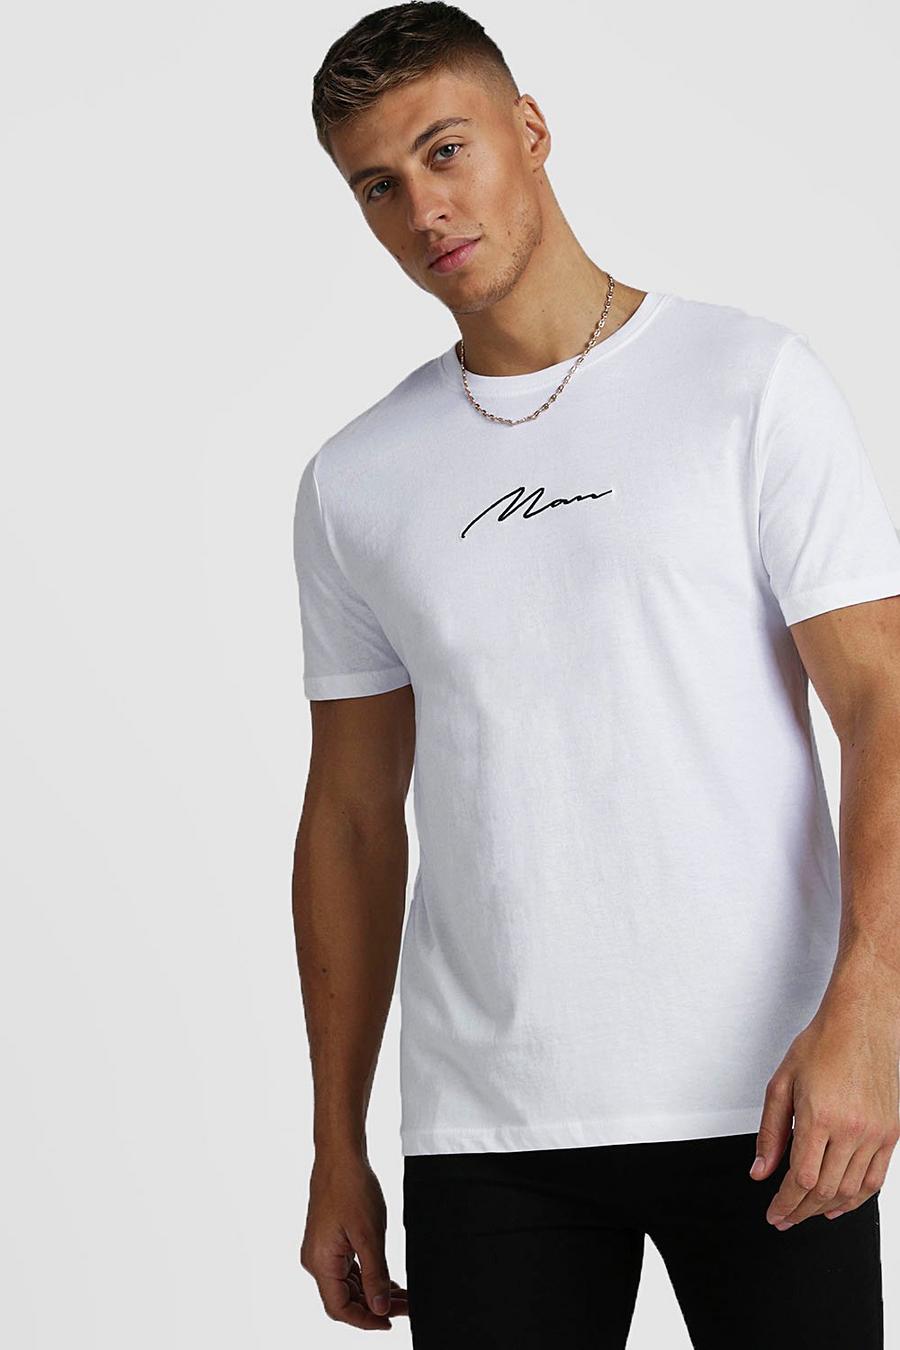 Camiseta con la firma Man bordada, Blanco image number 1